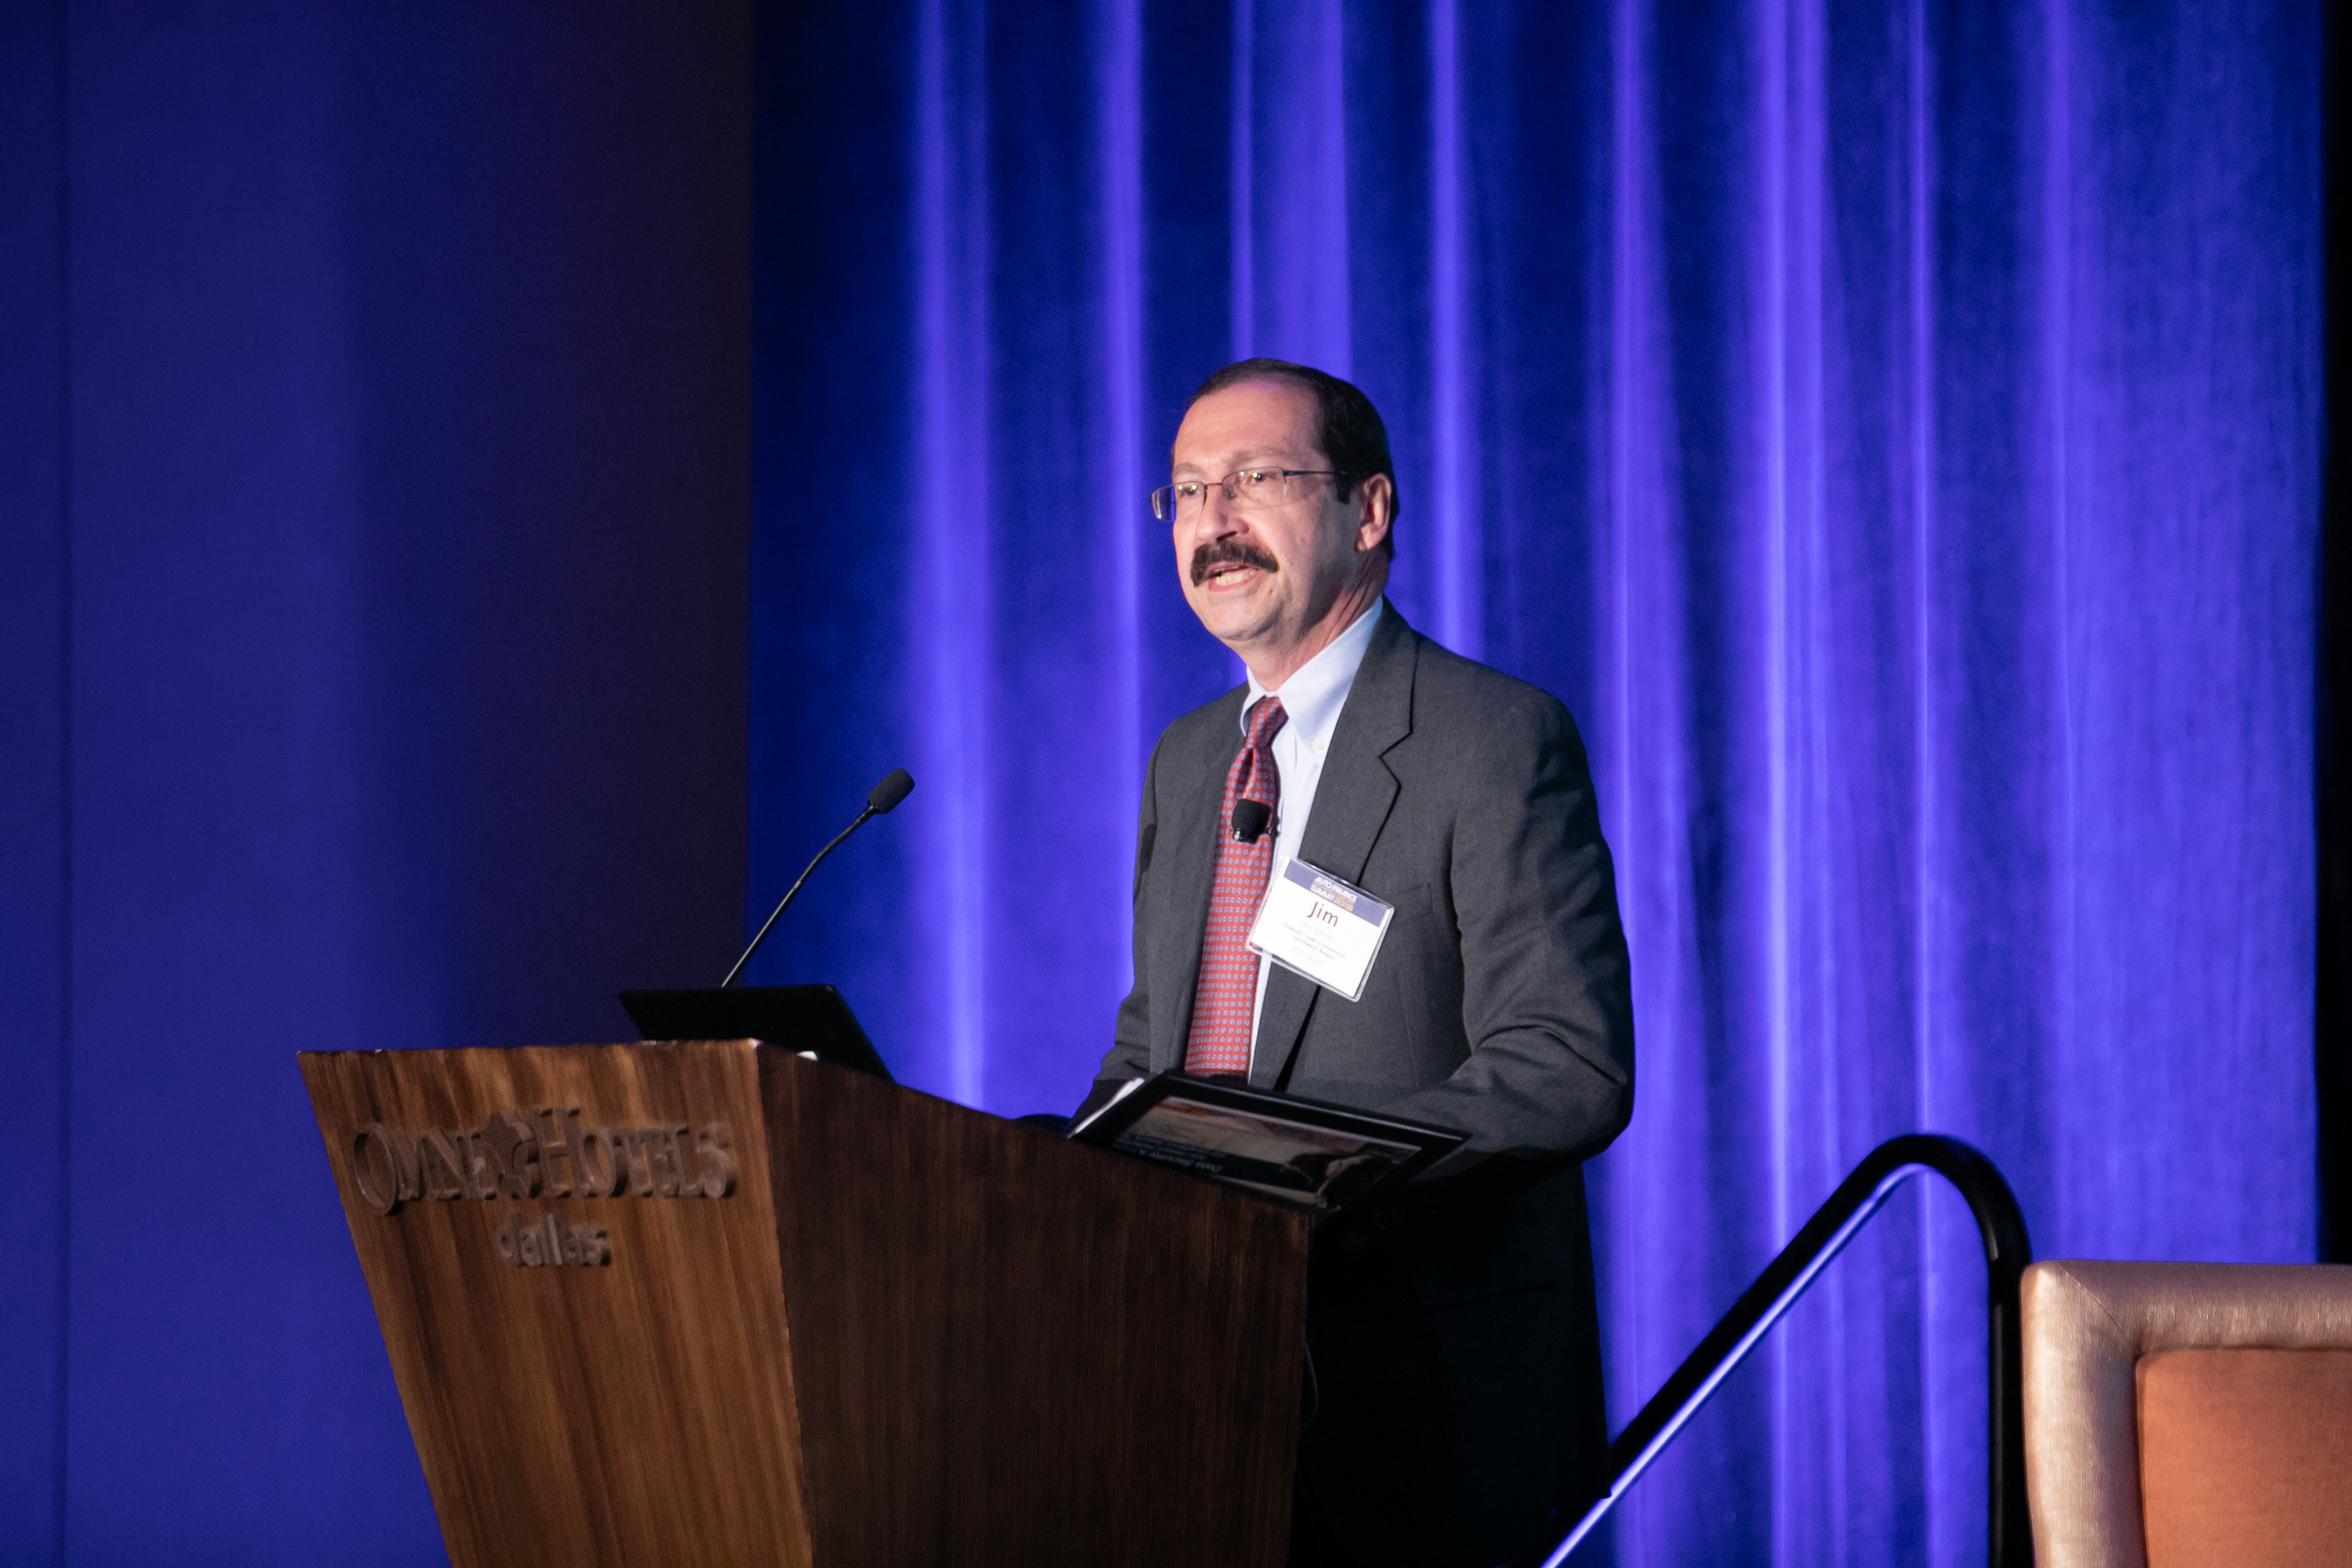 Jim Elliot, assistant regional director for the FTC's Southwest region, presents at AFPCS18.